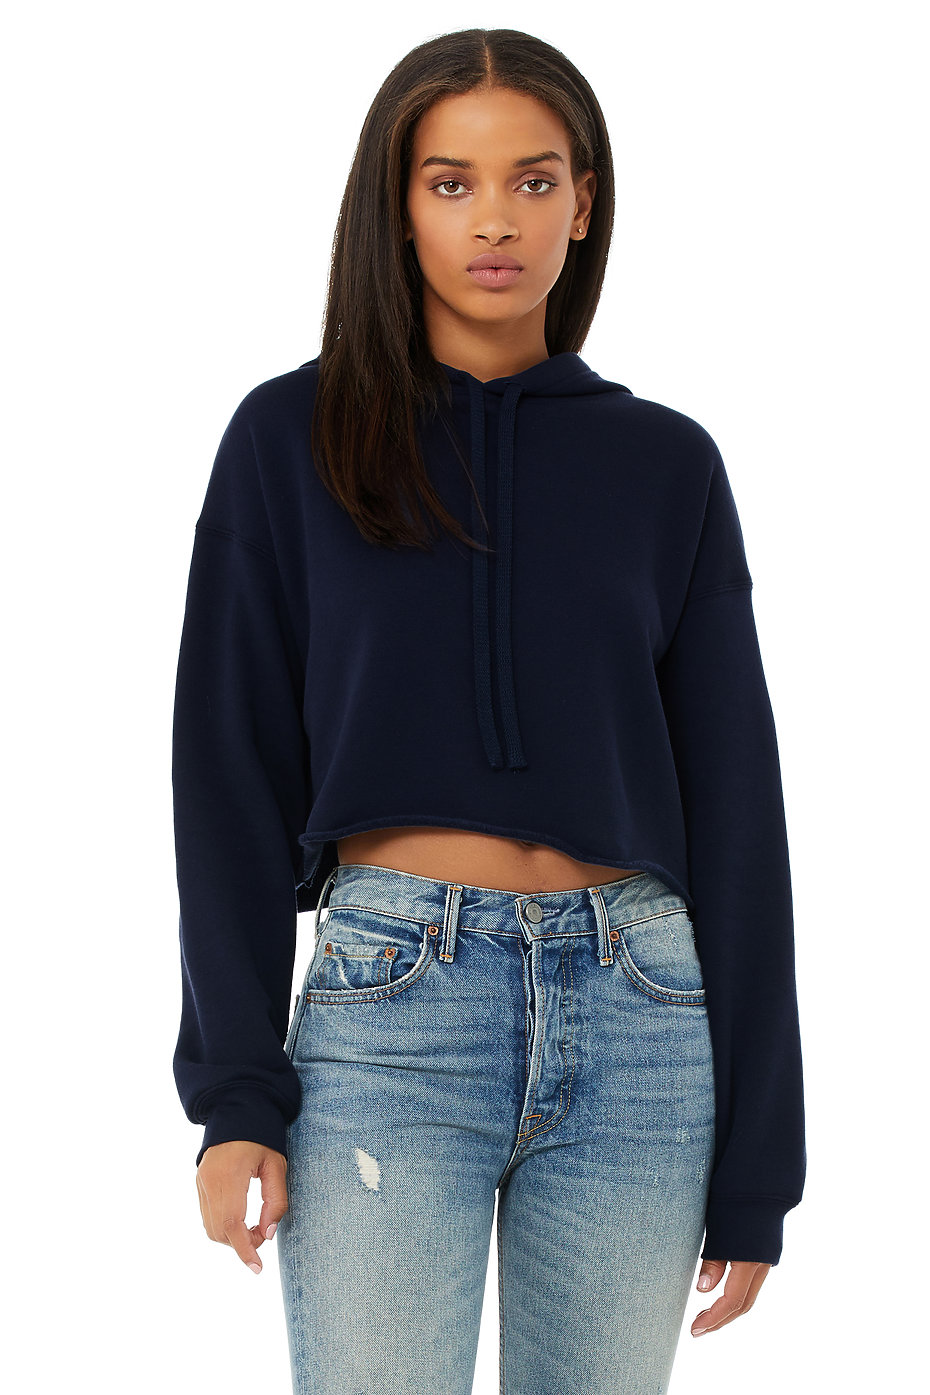 Women.power shoulder Cropped sweatshirt PDF pattern WATS111220 Home ...